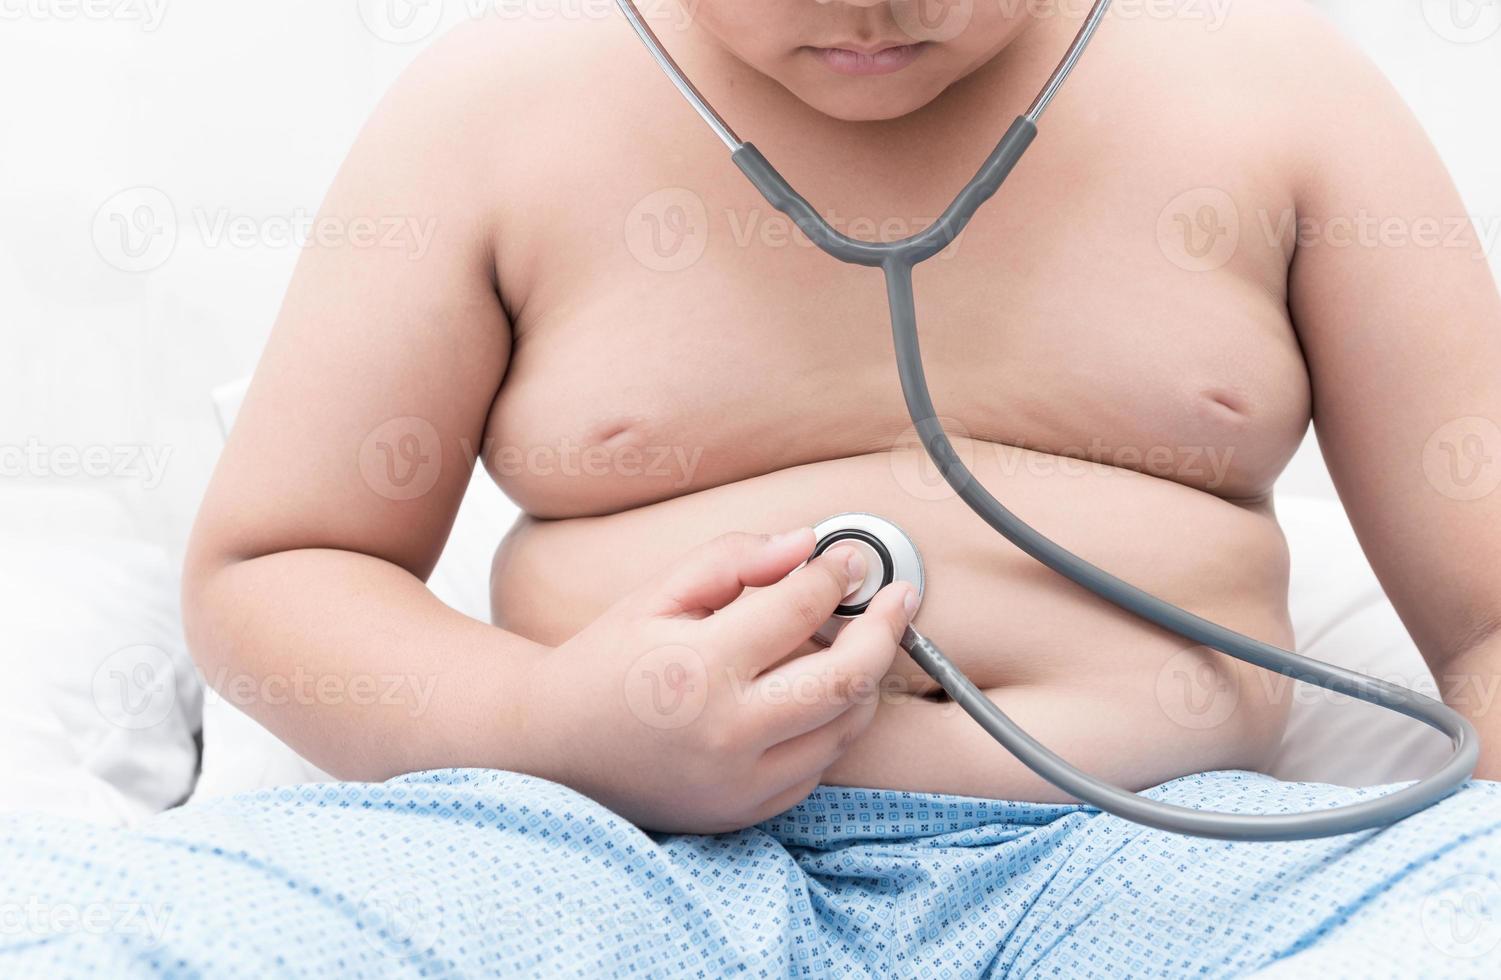 obeso gordo Garoto Verifica estômago de estetoscópio. foto